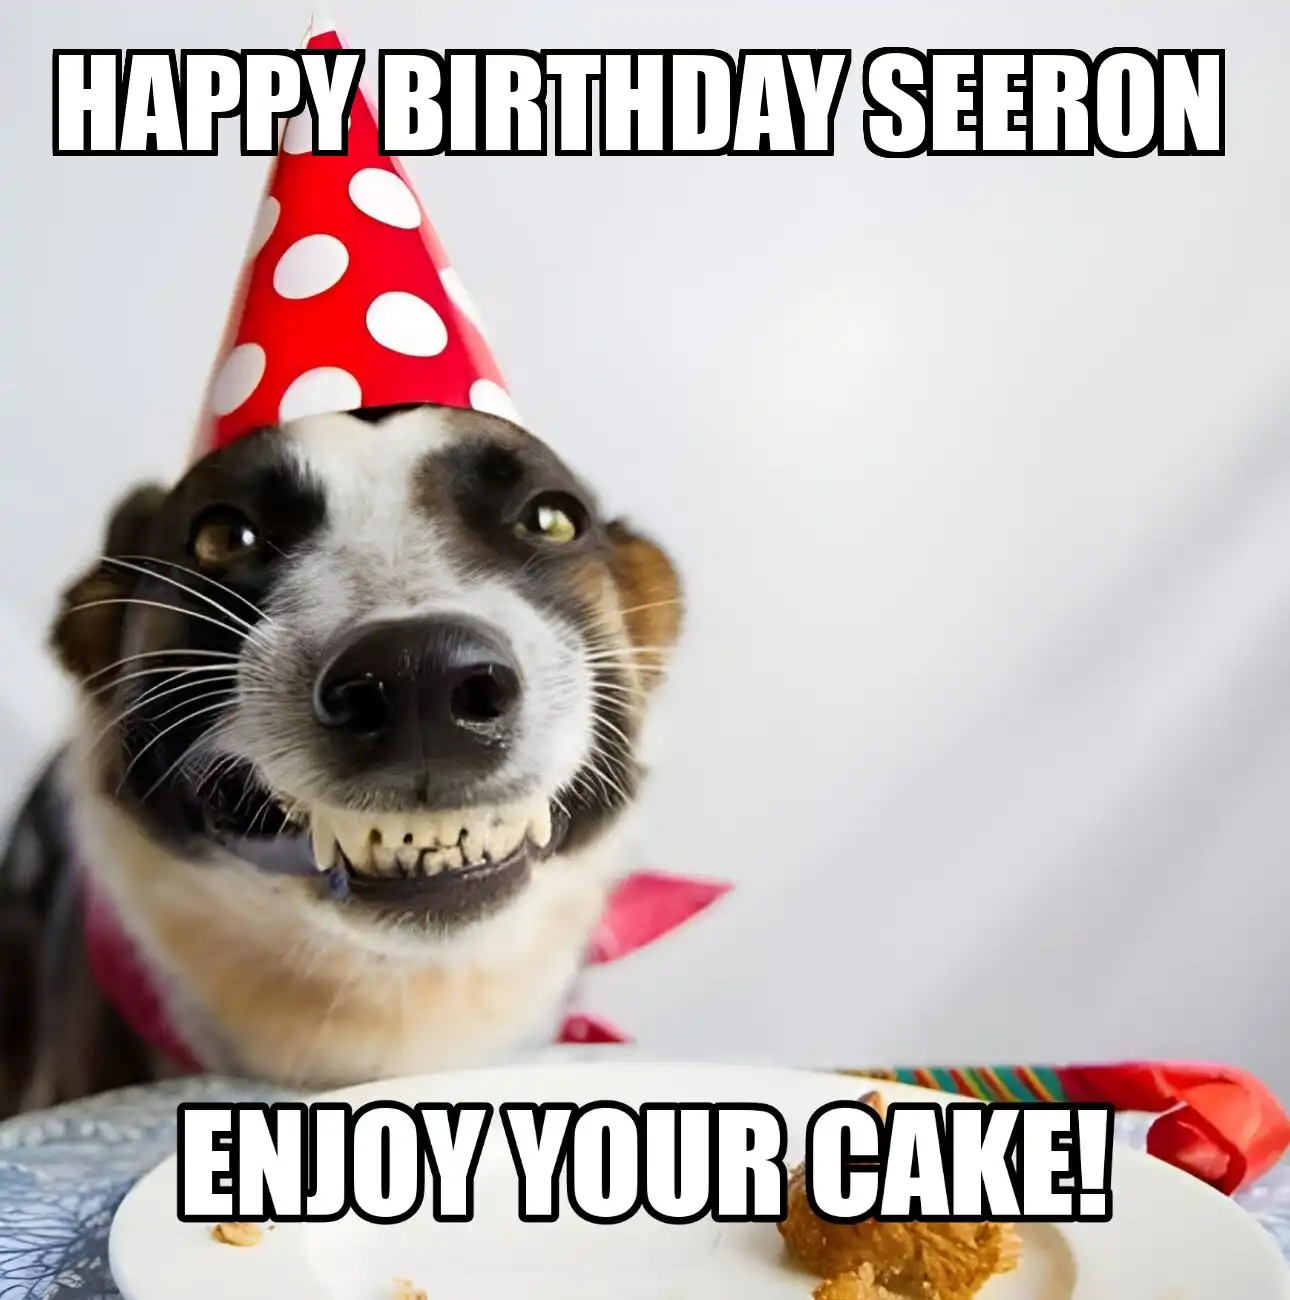 Happy Birthday Seeron Enjoy Your Cake Dog Meme